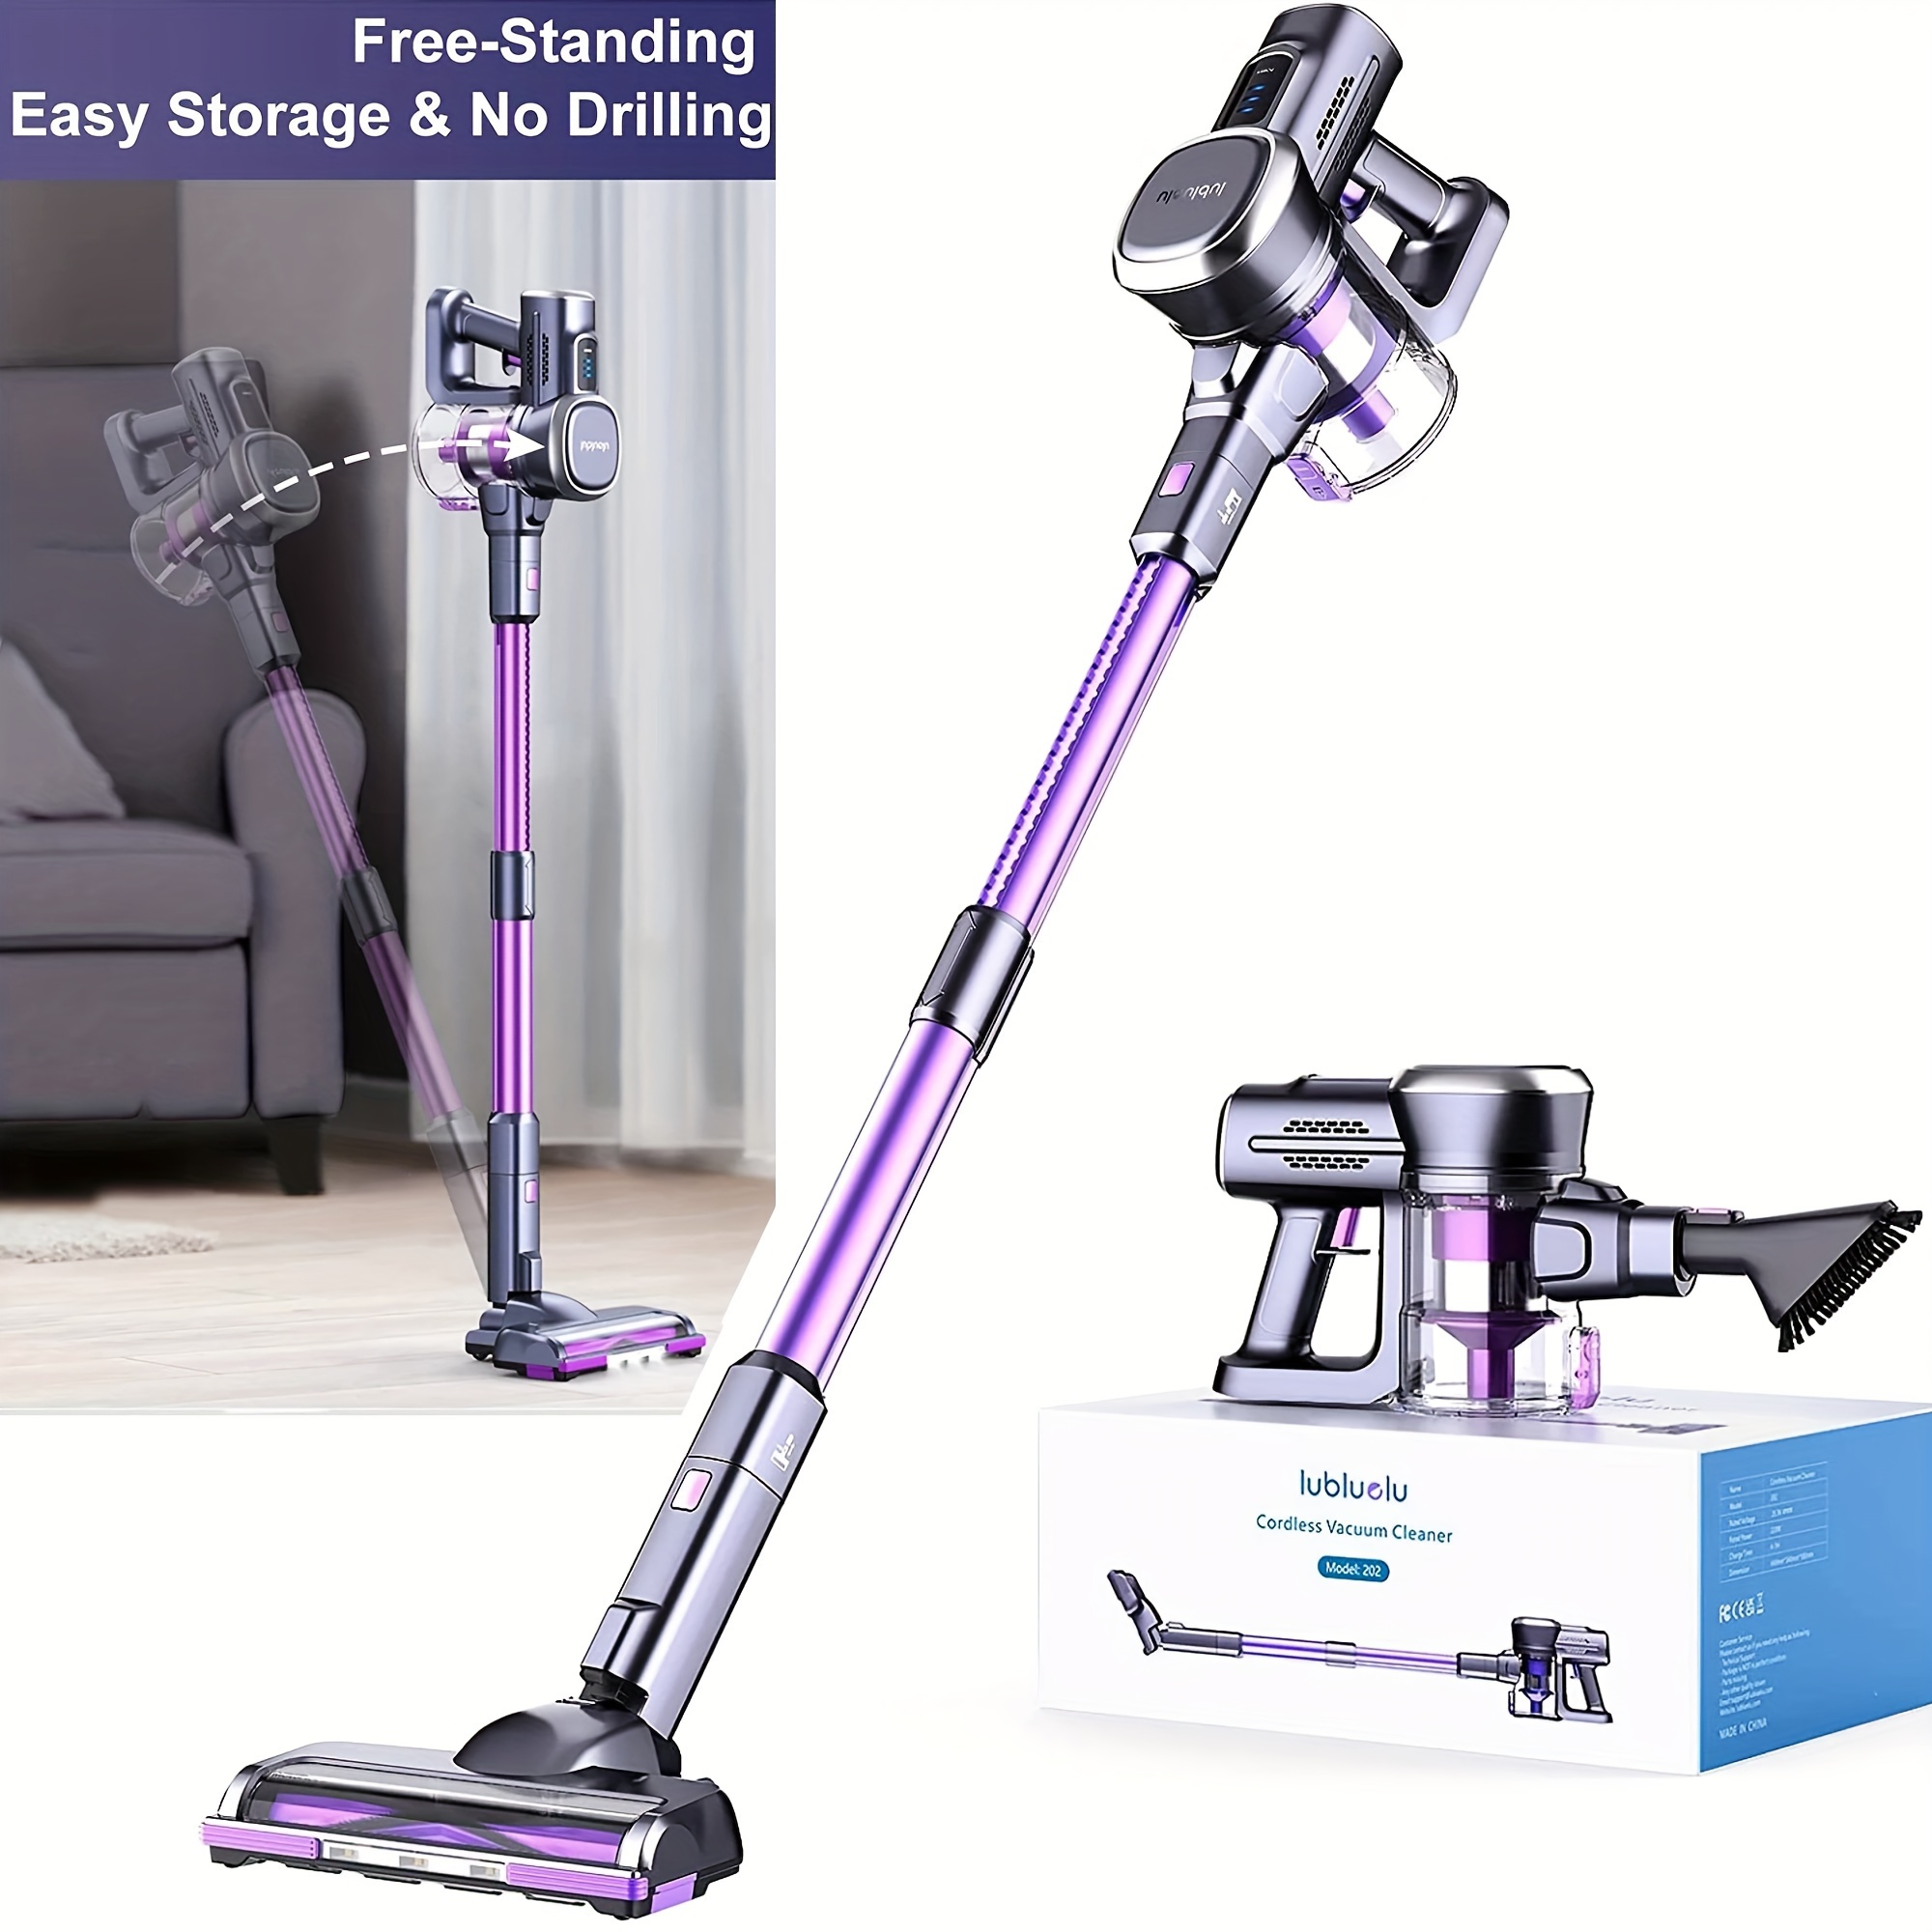 

Free-standing Vacuum Cleaner 25kpa, Lubluelu 202 Powerful Lightweight Cordless 6 In 1 Stick Vacuum Cleaner For Carpet Floor Pet Hair Home